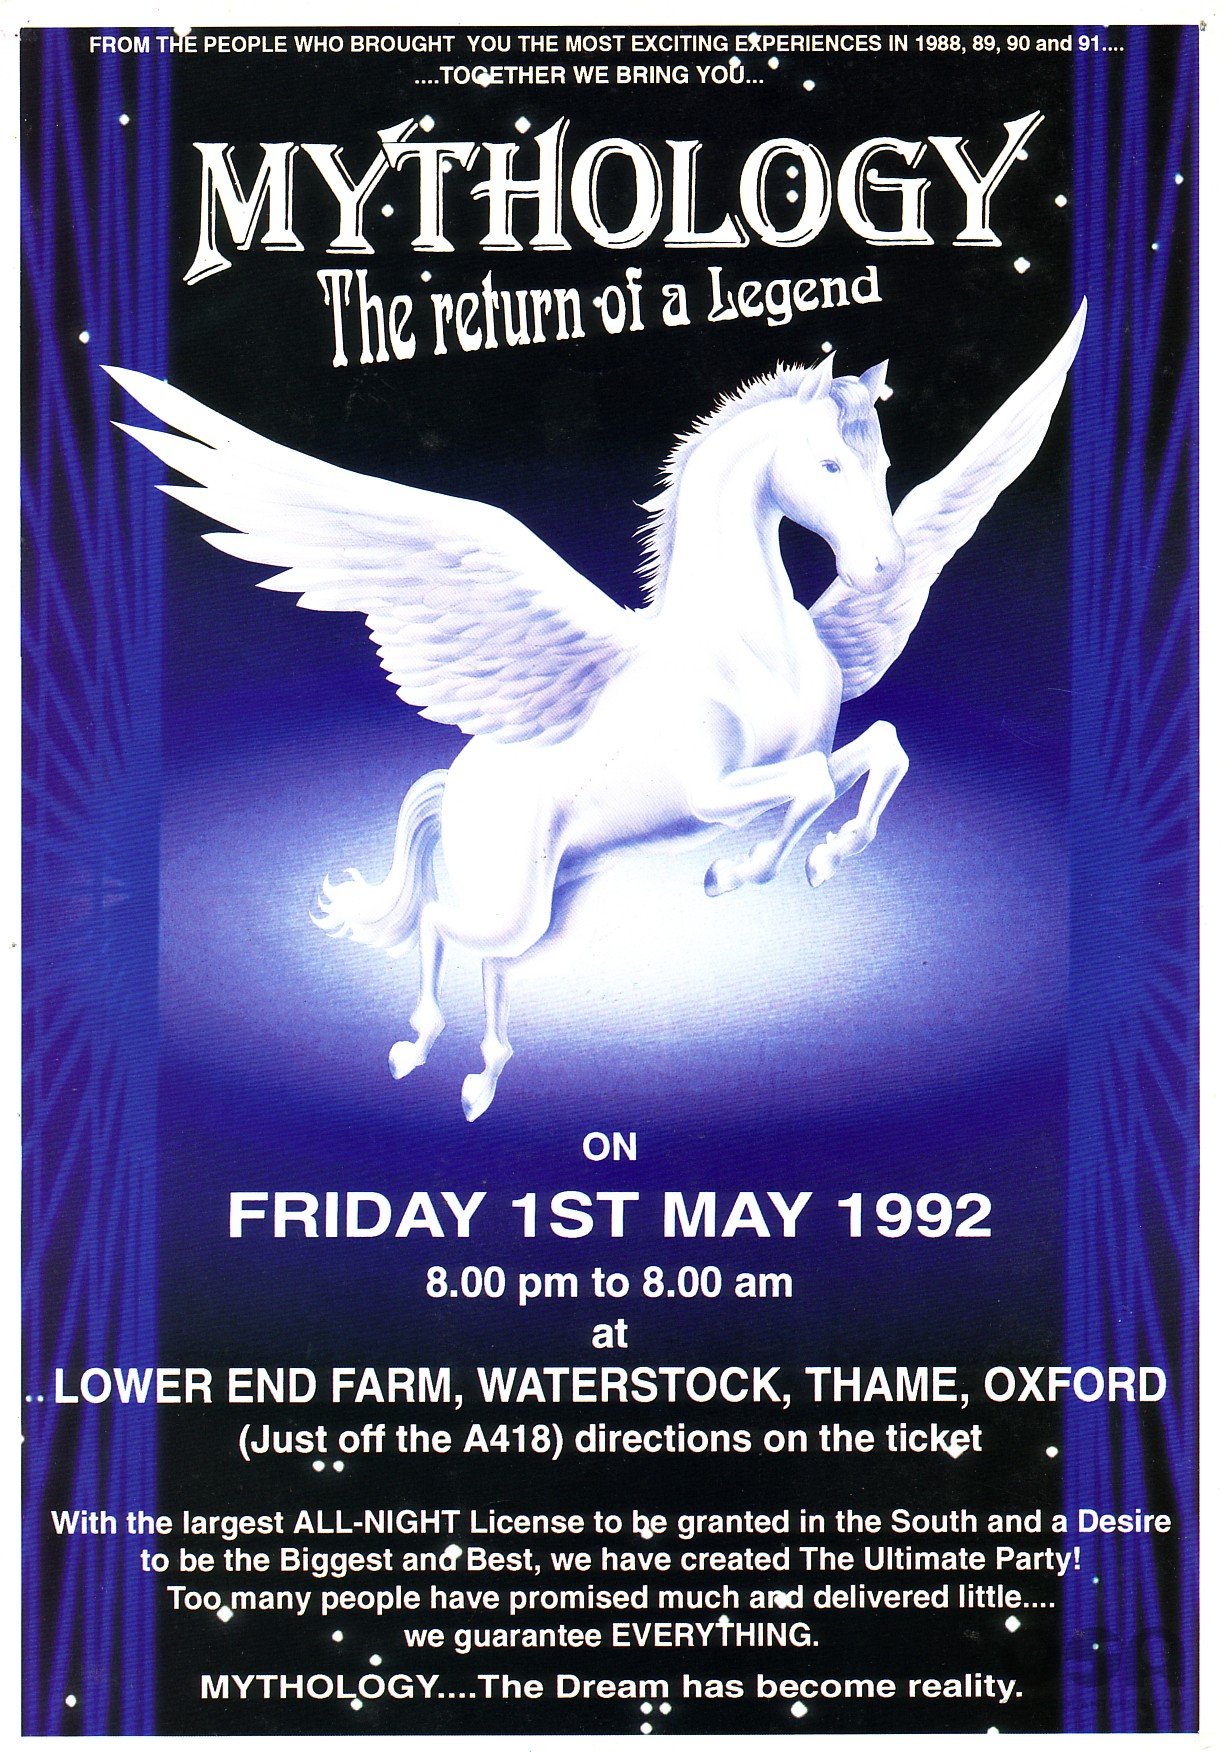 1_Mythology_The_return_of_a_legend_Fri_1st_May_1992___Lower_end_farm_Oxford.jpg